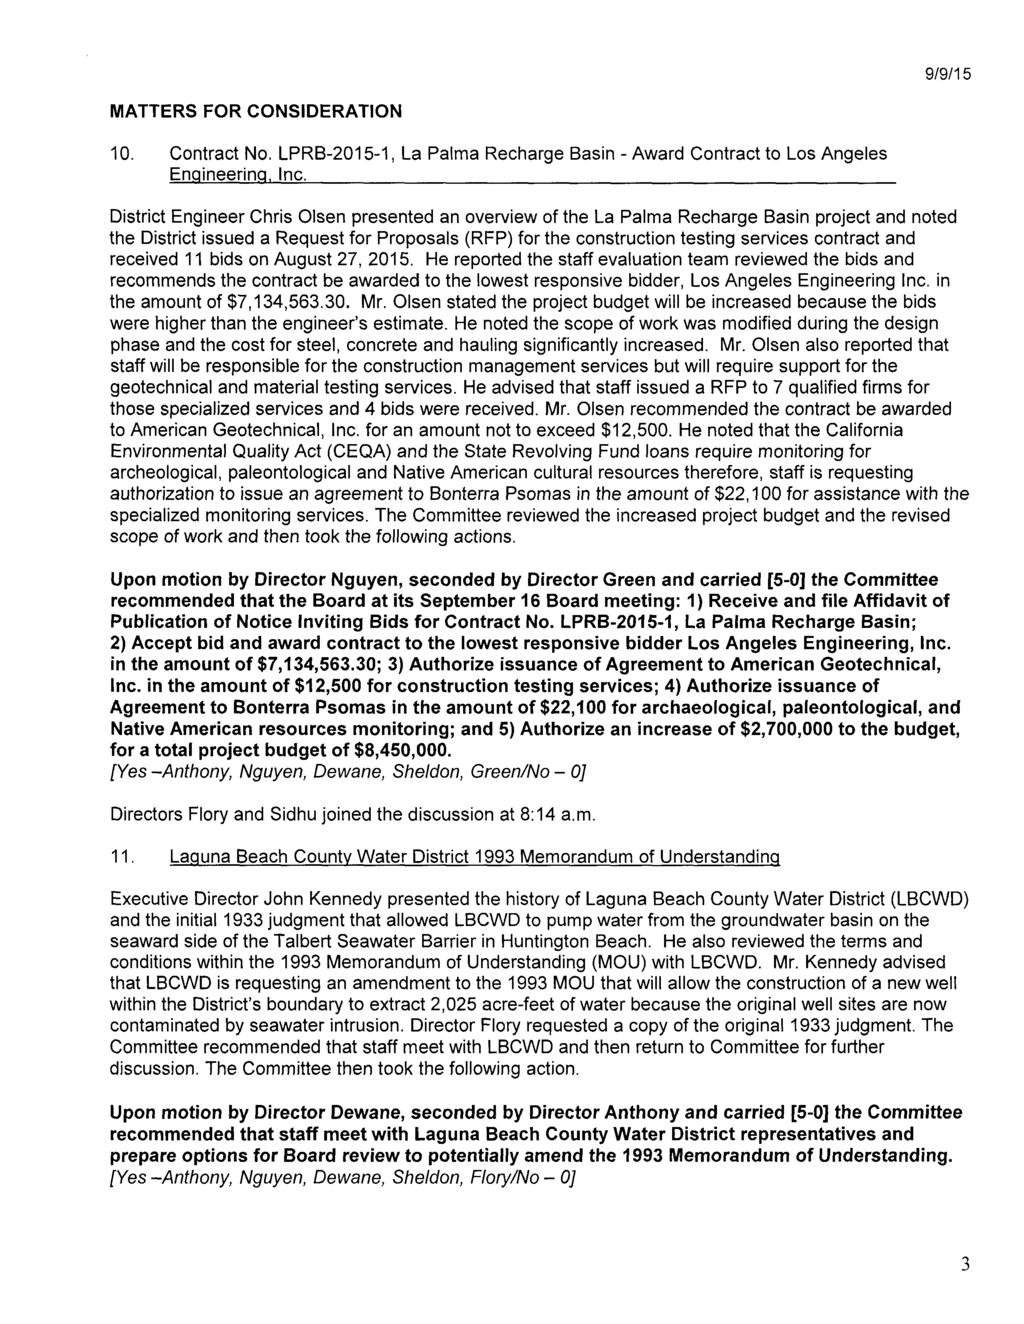 MATTERS FOR CONSIDERATION 10. Contract No. LPRB-2015-1, La Palma Recharge Basin - Award Contract to Los Angeles En,qineerin,q, Inc.